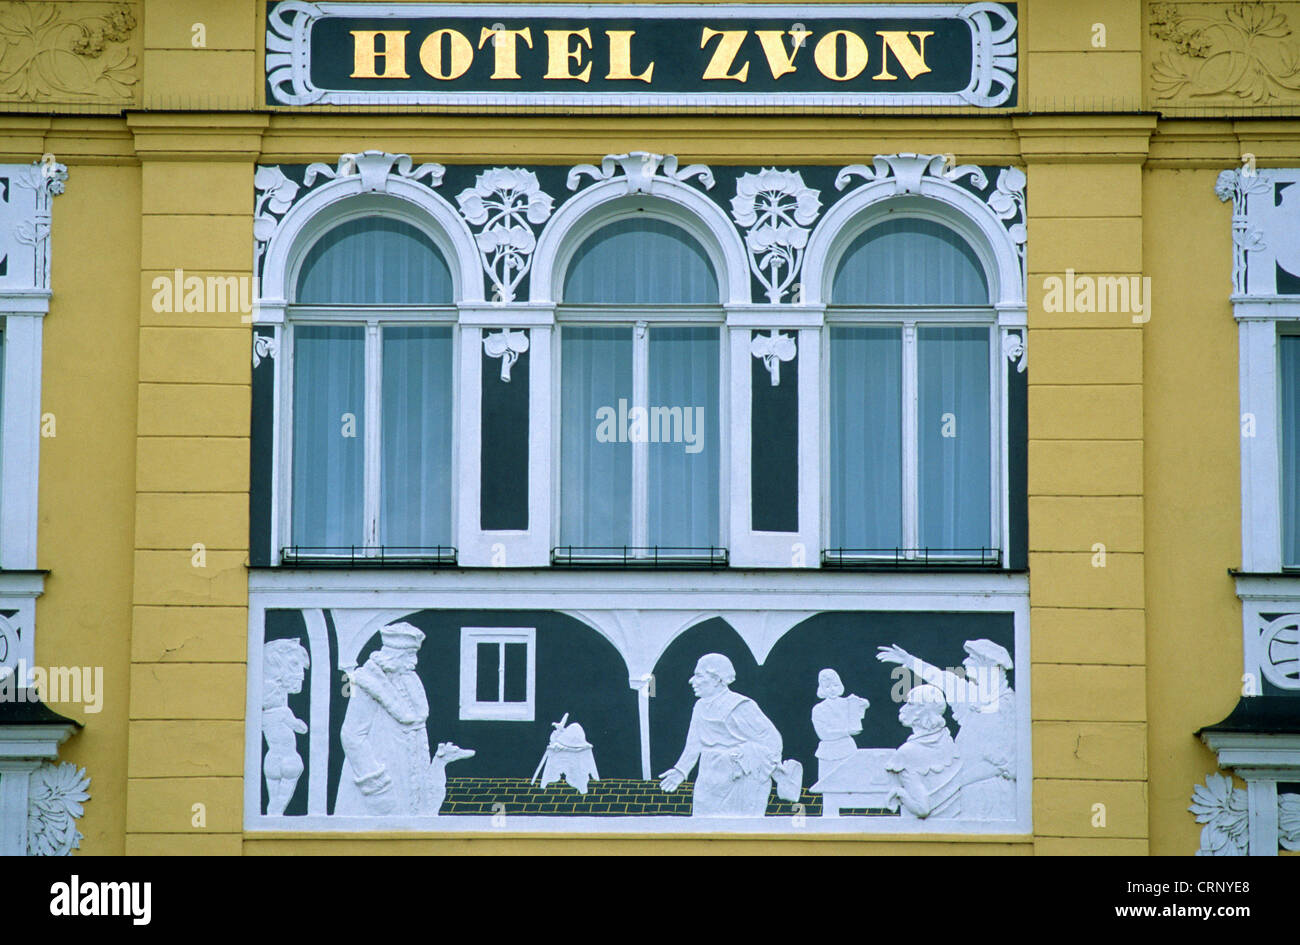 Czech Republic, Ceske Budejovice, Hotel Zvon, architecture detail, Stock Photo